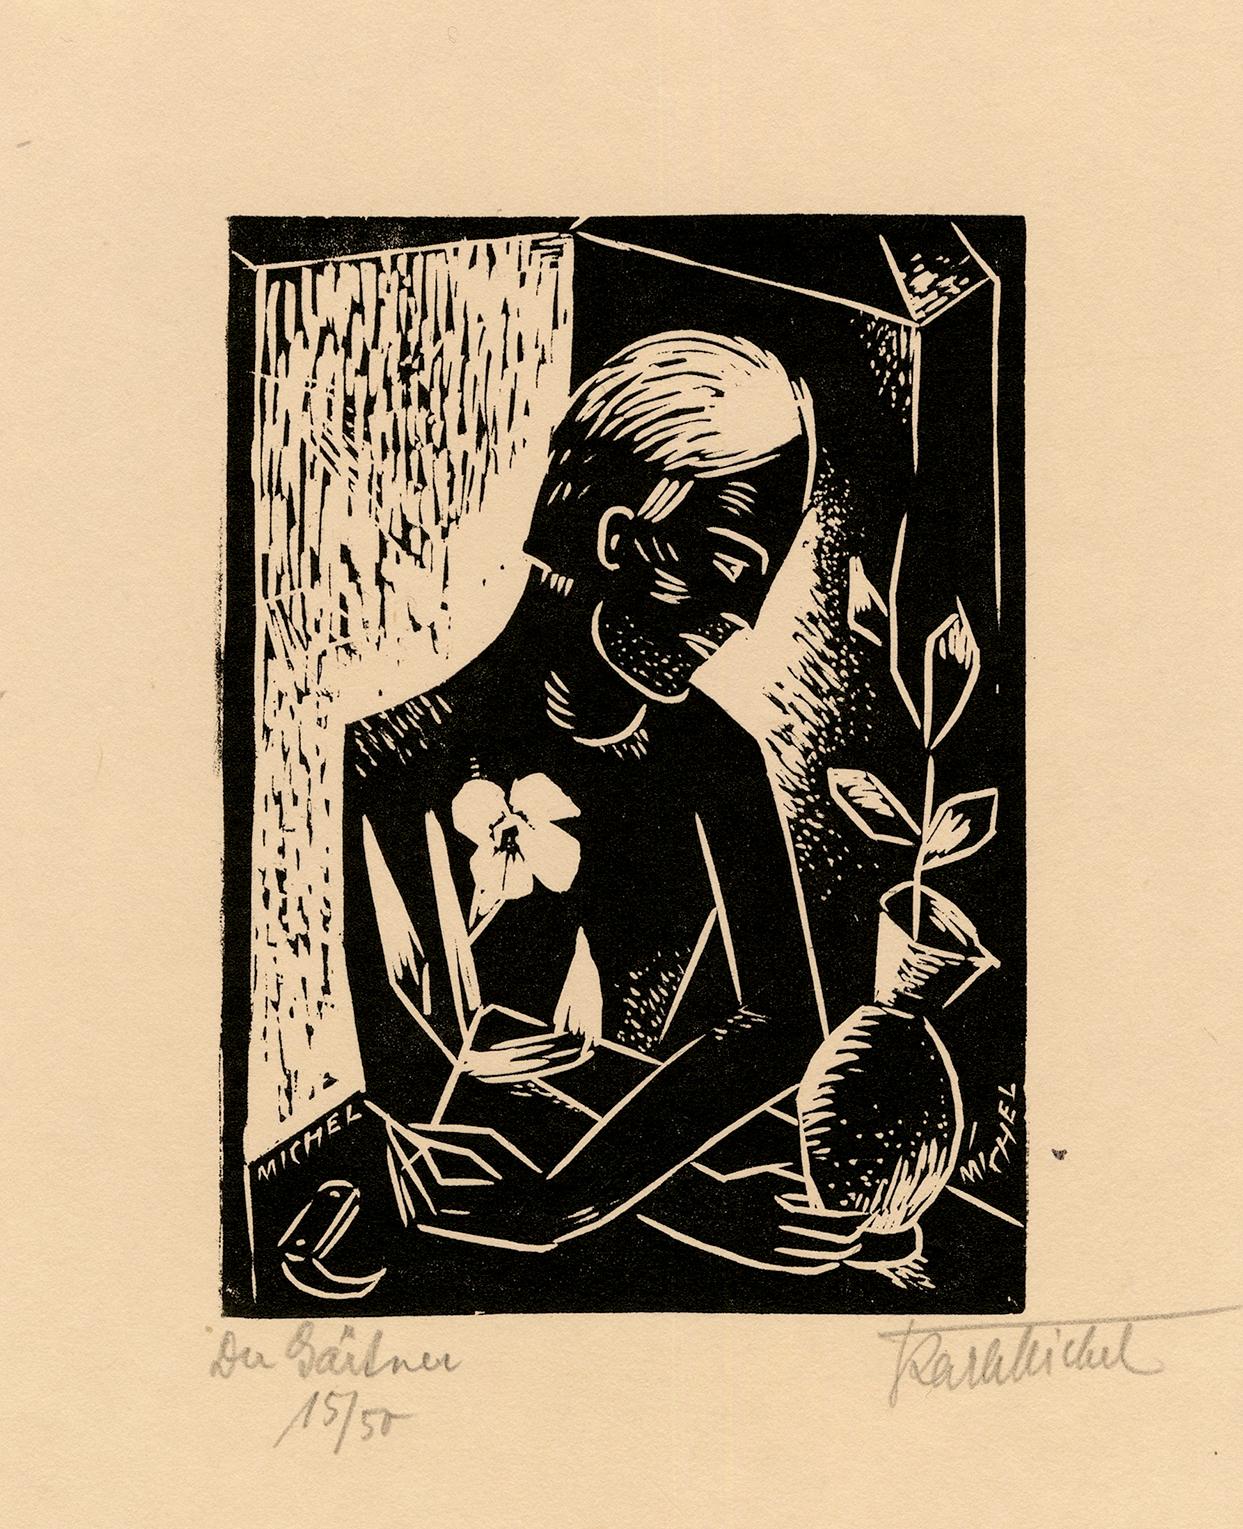 Karl Michel Figurative Print - 'Der Gartner' (The Gardener) — 1920s German Expressionism